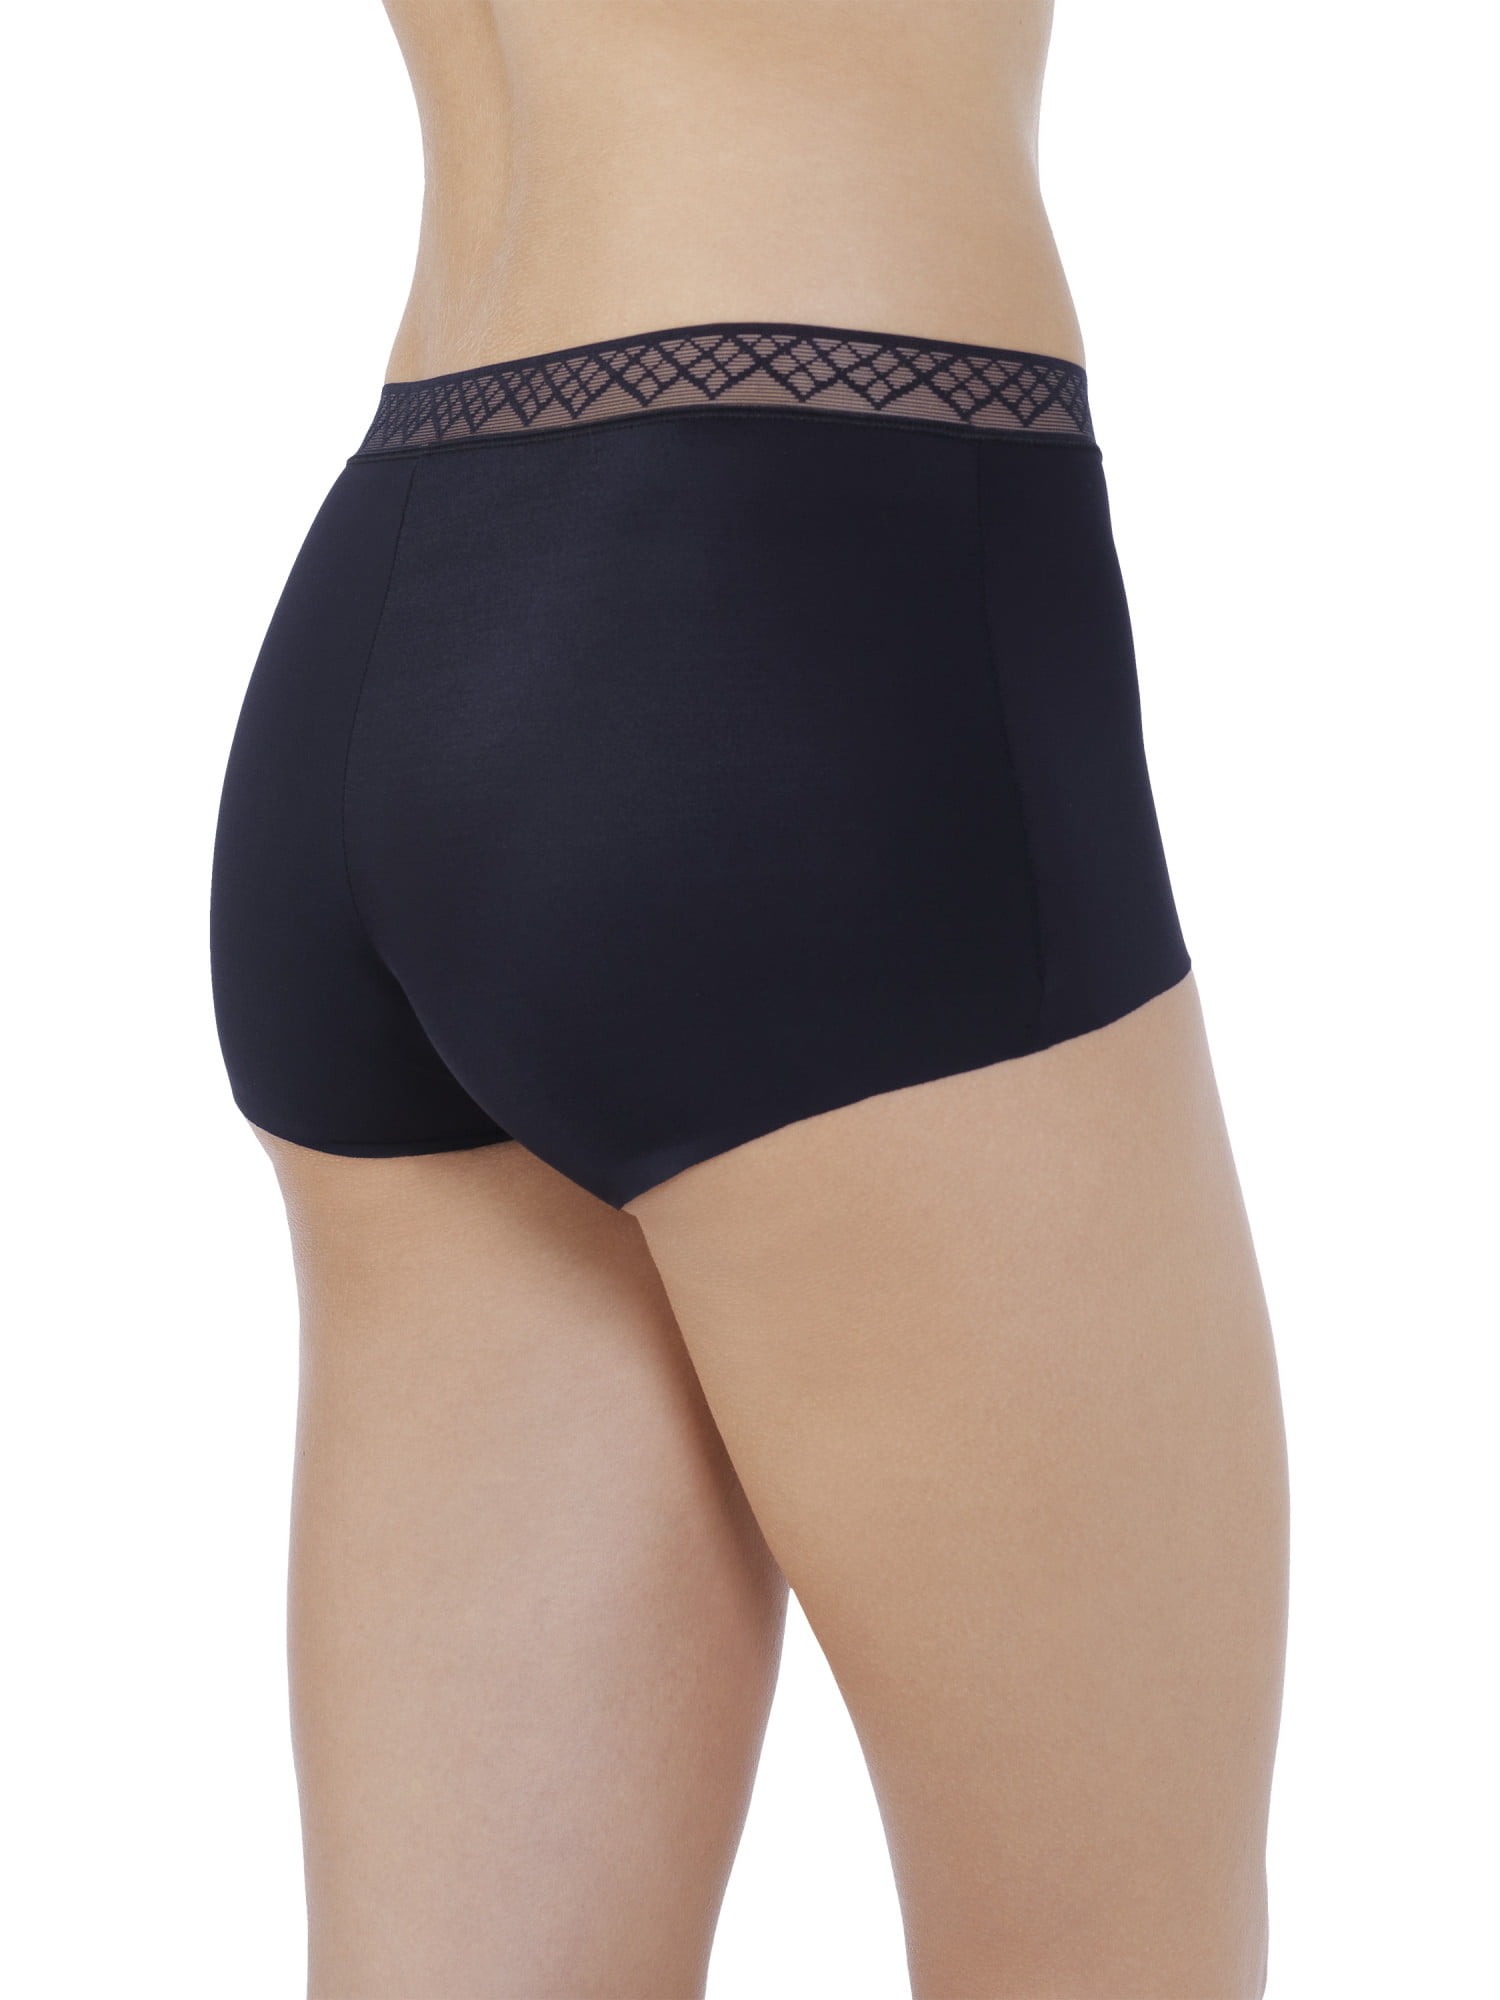 Women's Vassarette 12383 Invisibly Smooth Boyshort Panty (Black Sable XL)